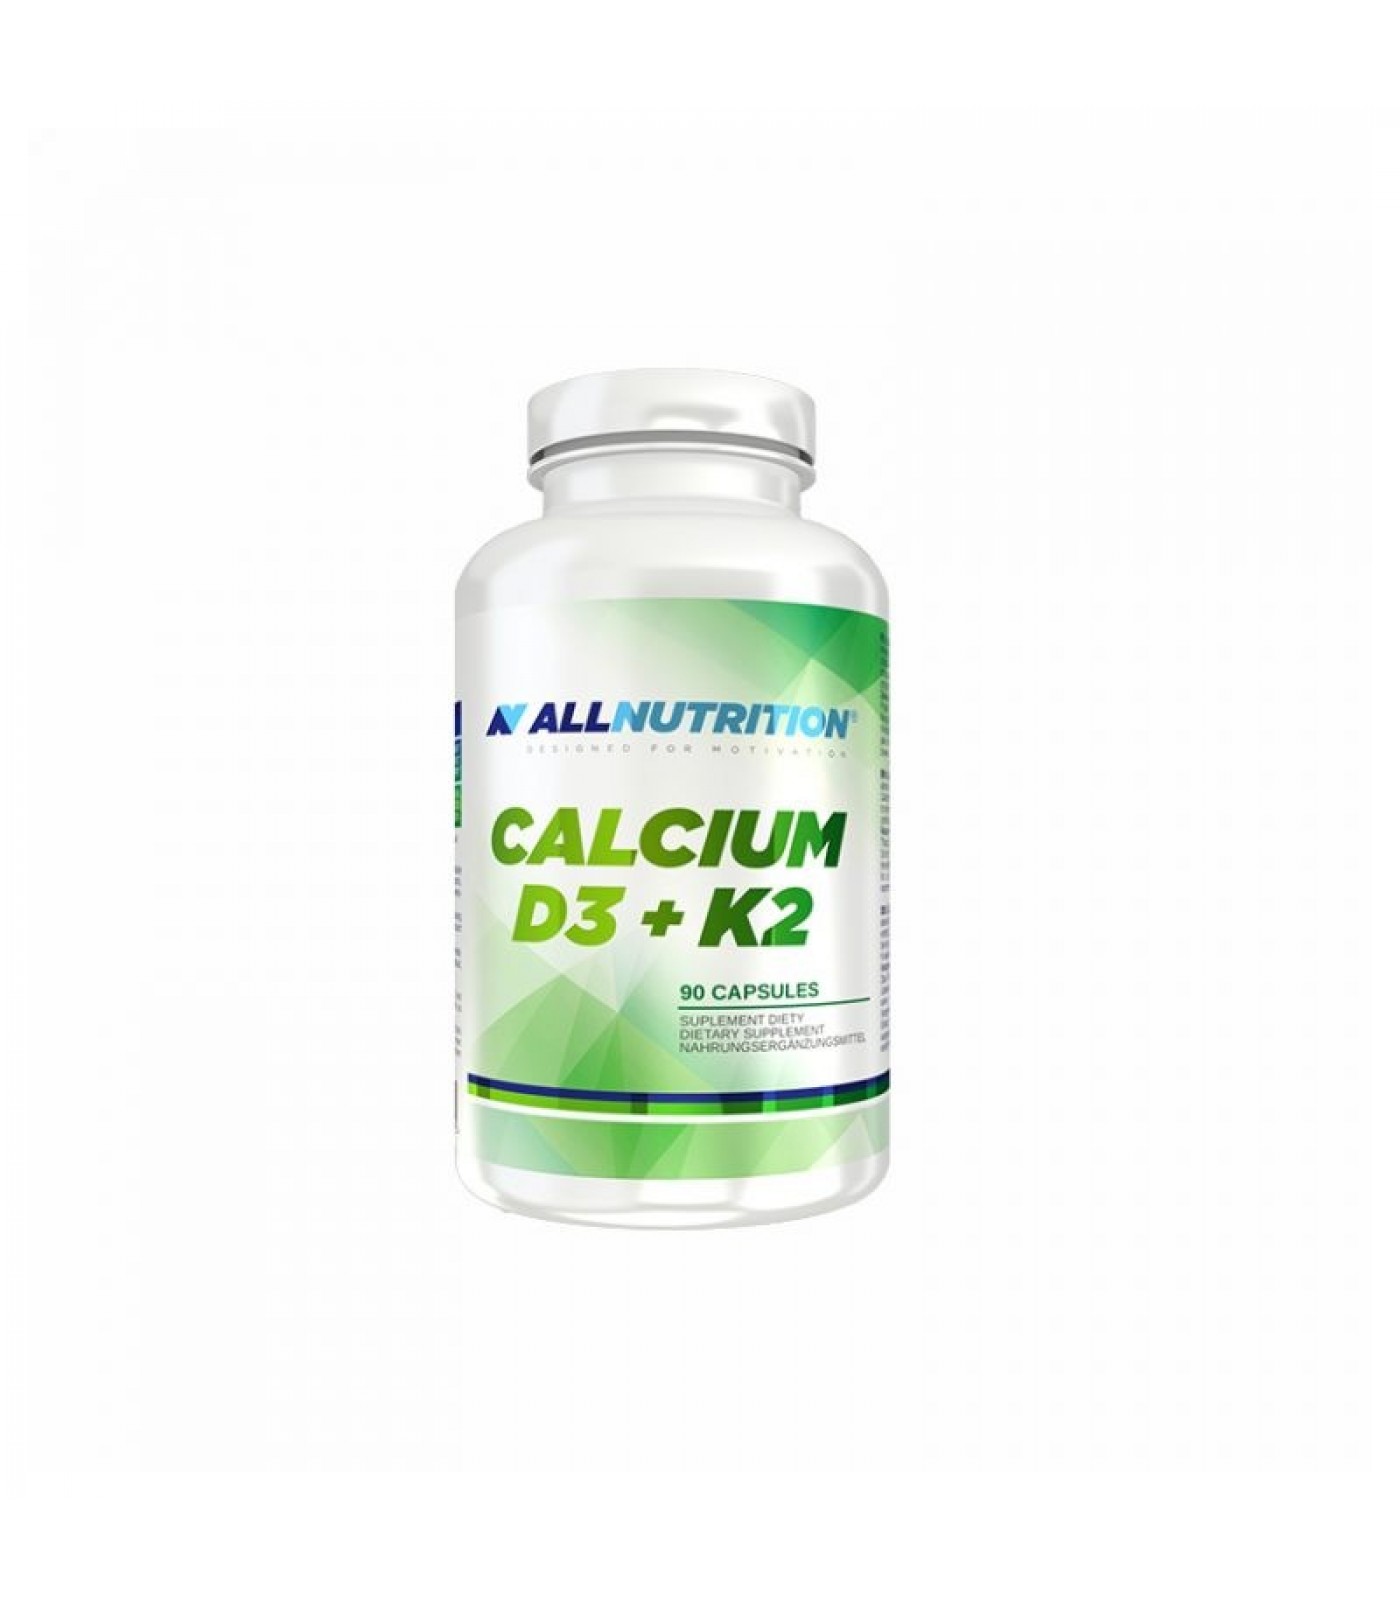 Allnutrition Calcium, D3 + K2